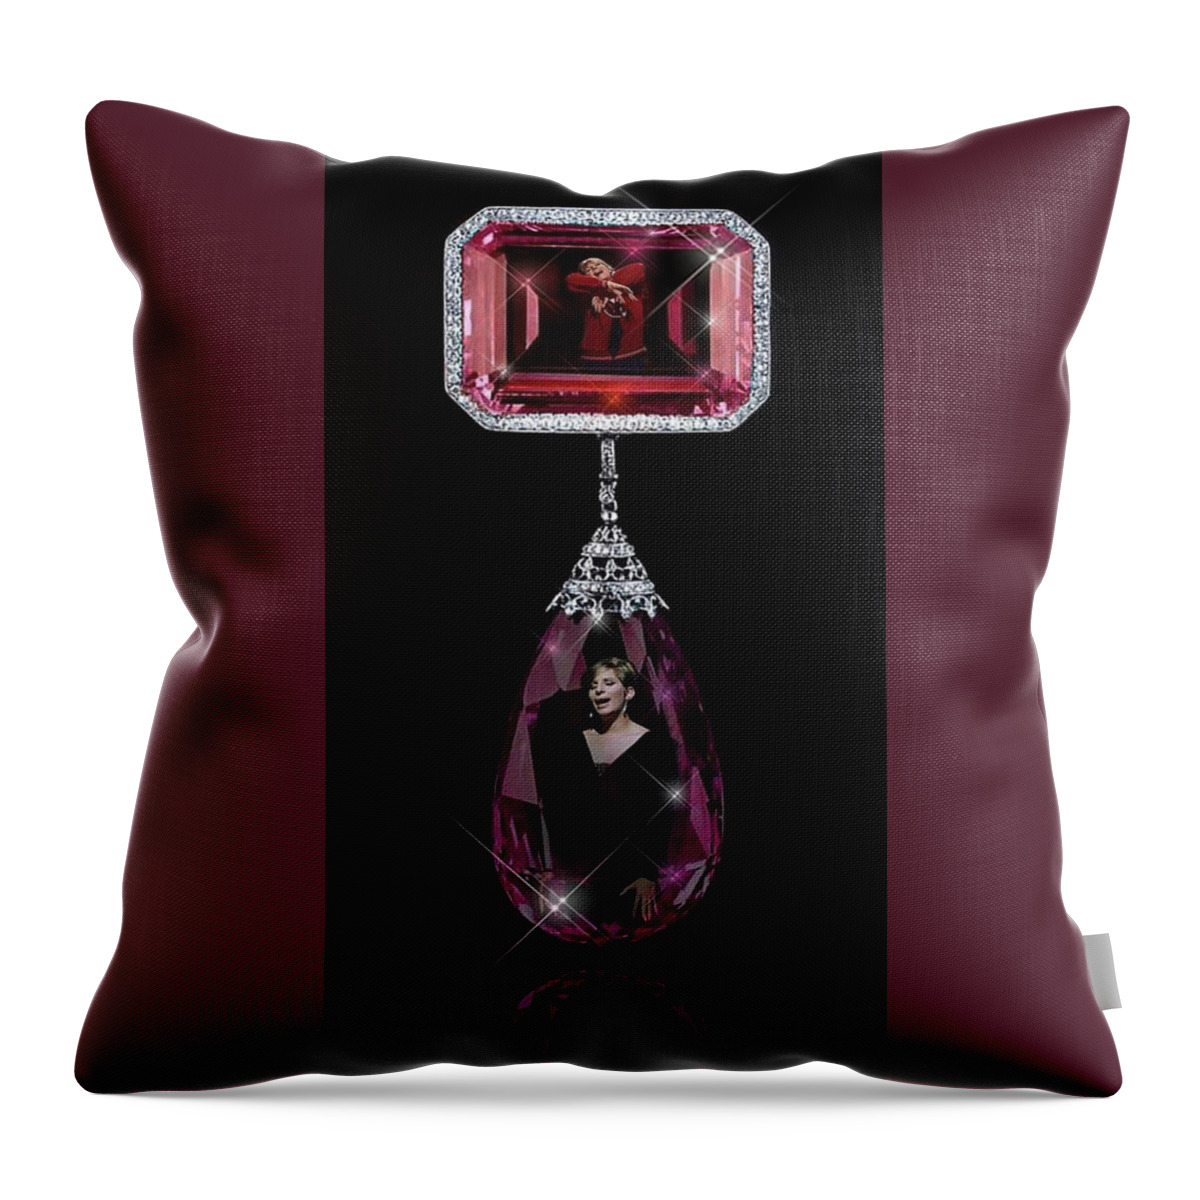  Throw Pillow featuring the digital art Barbra Streisand 9 by Richard Laeton